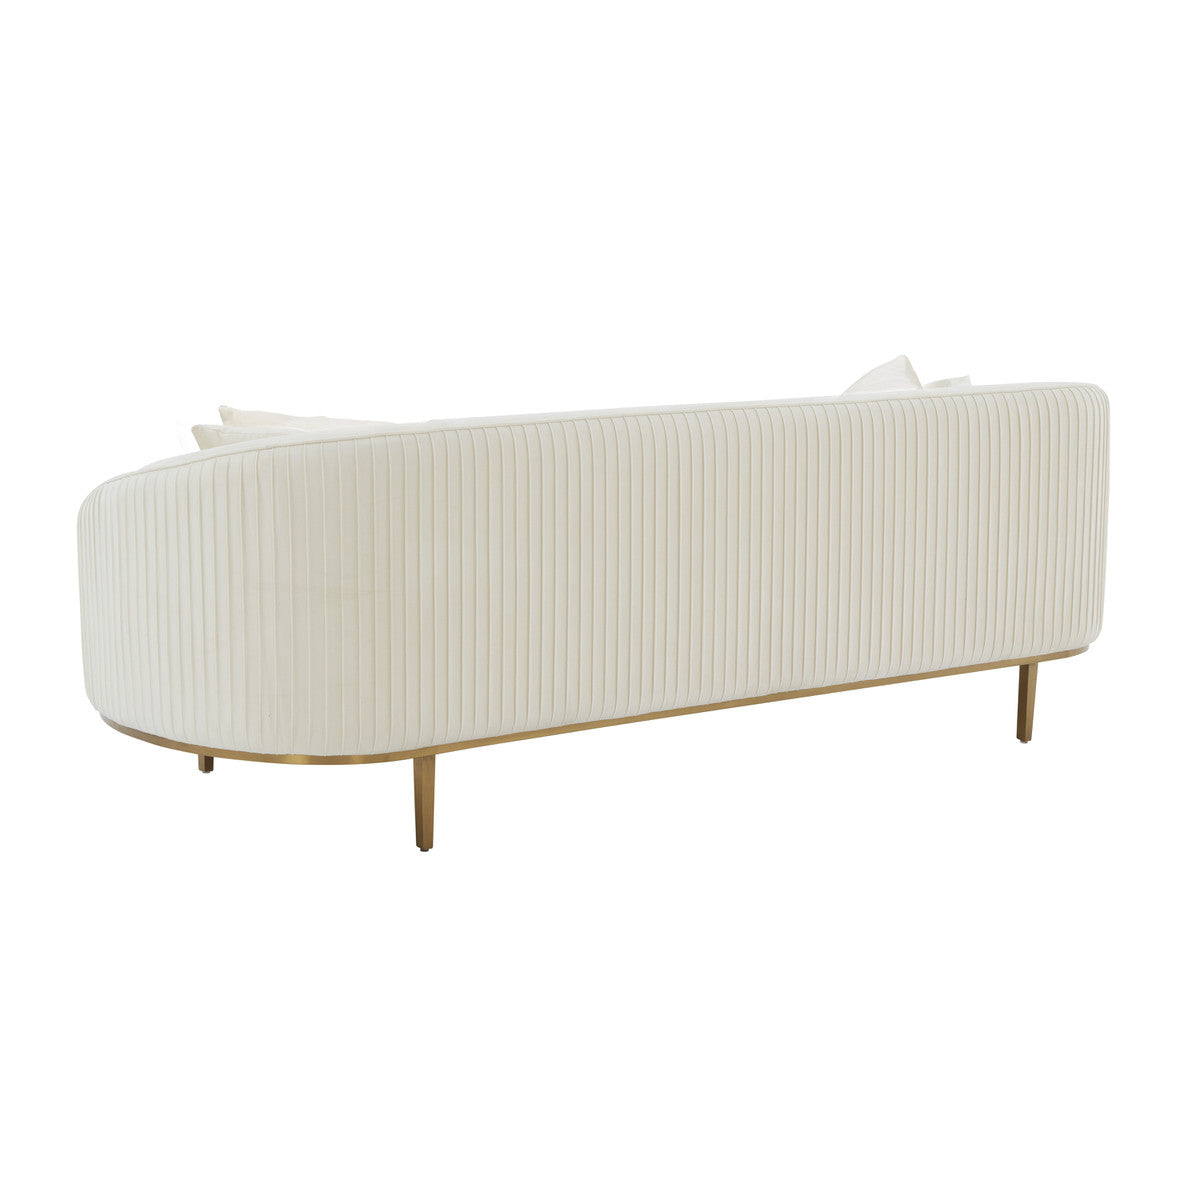 Michelle Cream Velvet Pleated Sofa - Luxury Living Collection